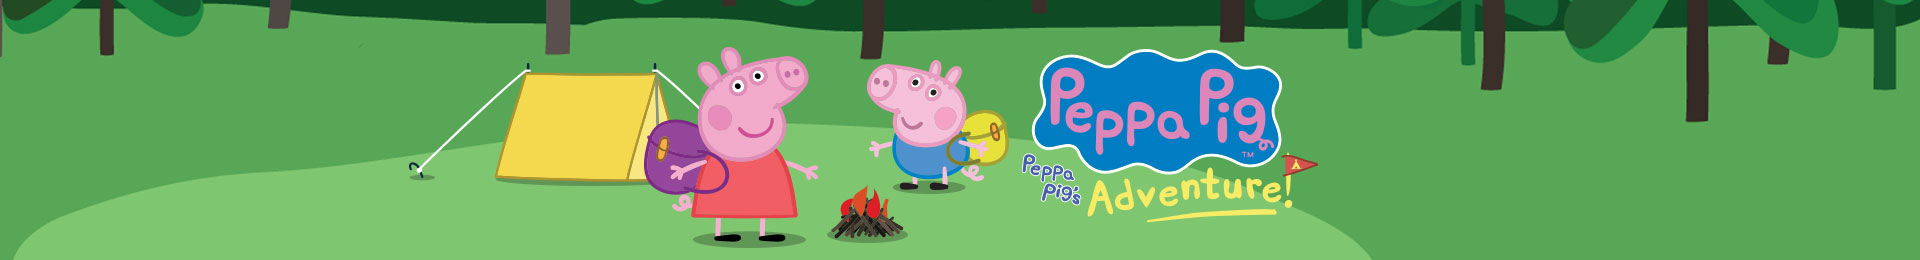 Peppa Pig's Adventure banner image